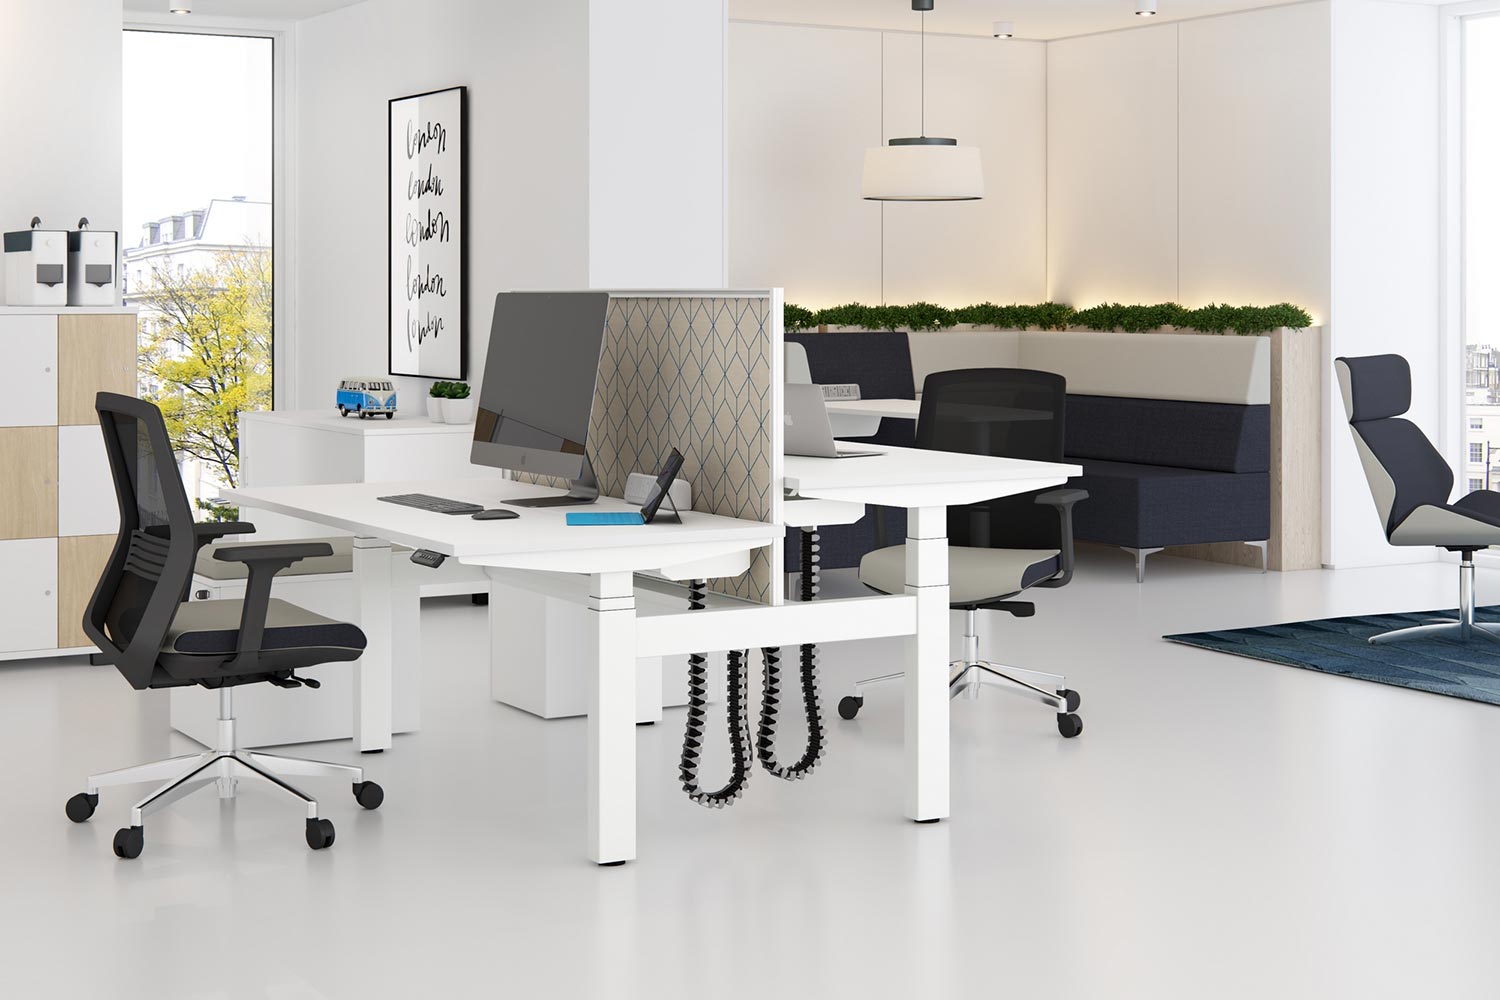 office furniture design trends 2021 - ergonomic sit stand desks